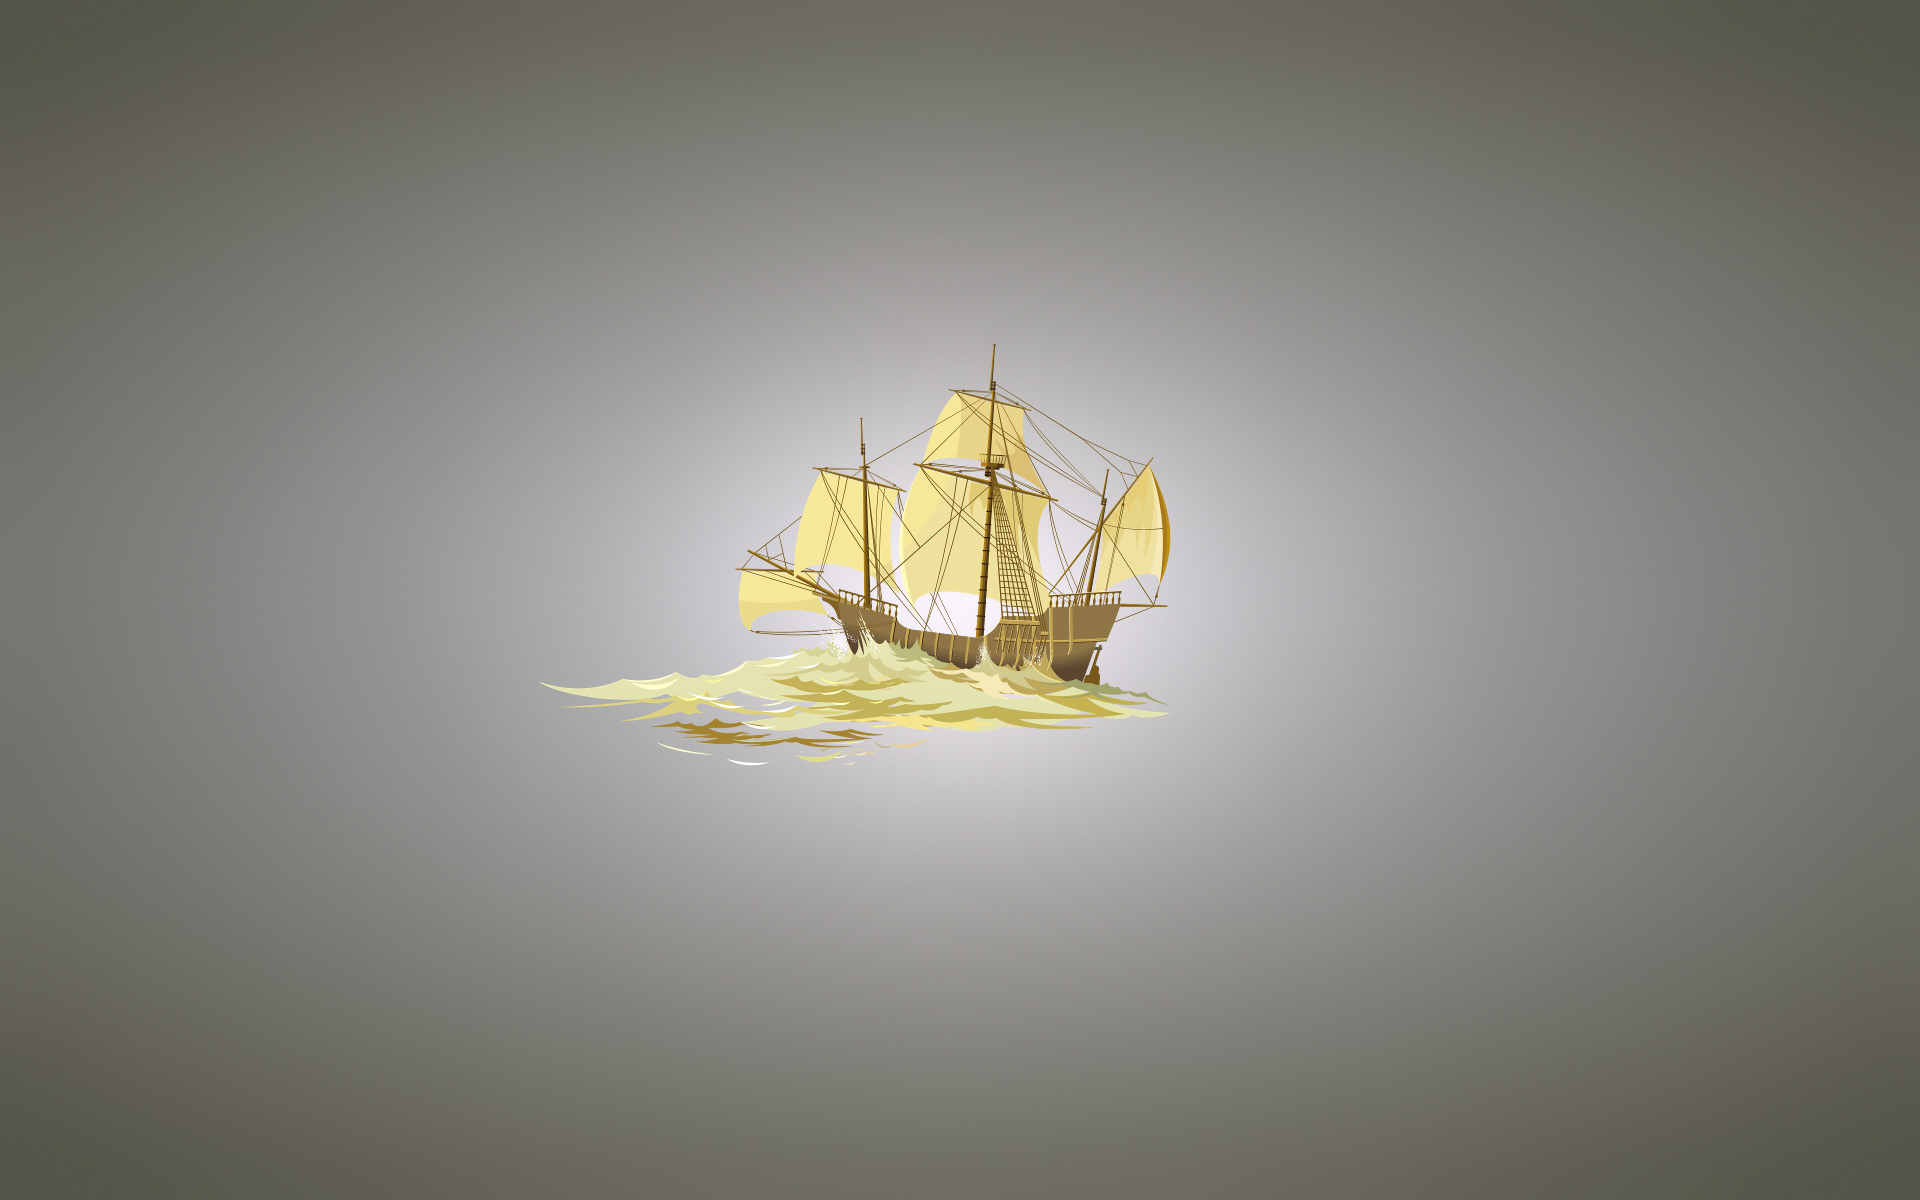 Image: Ship, sail, mast, waves, gray background